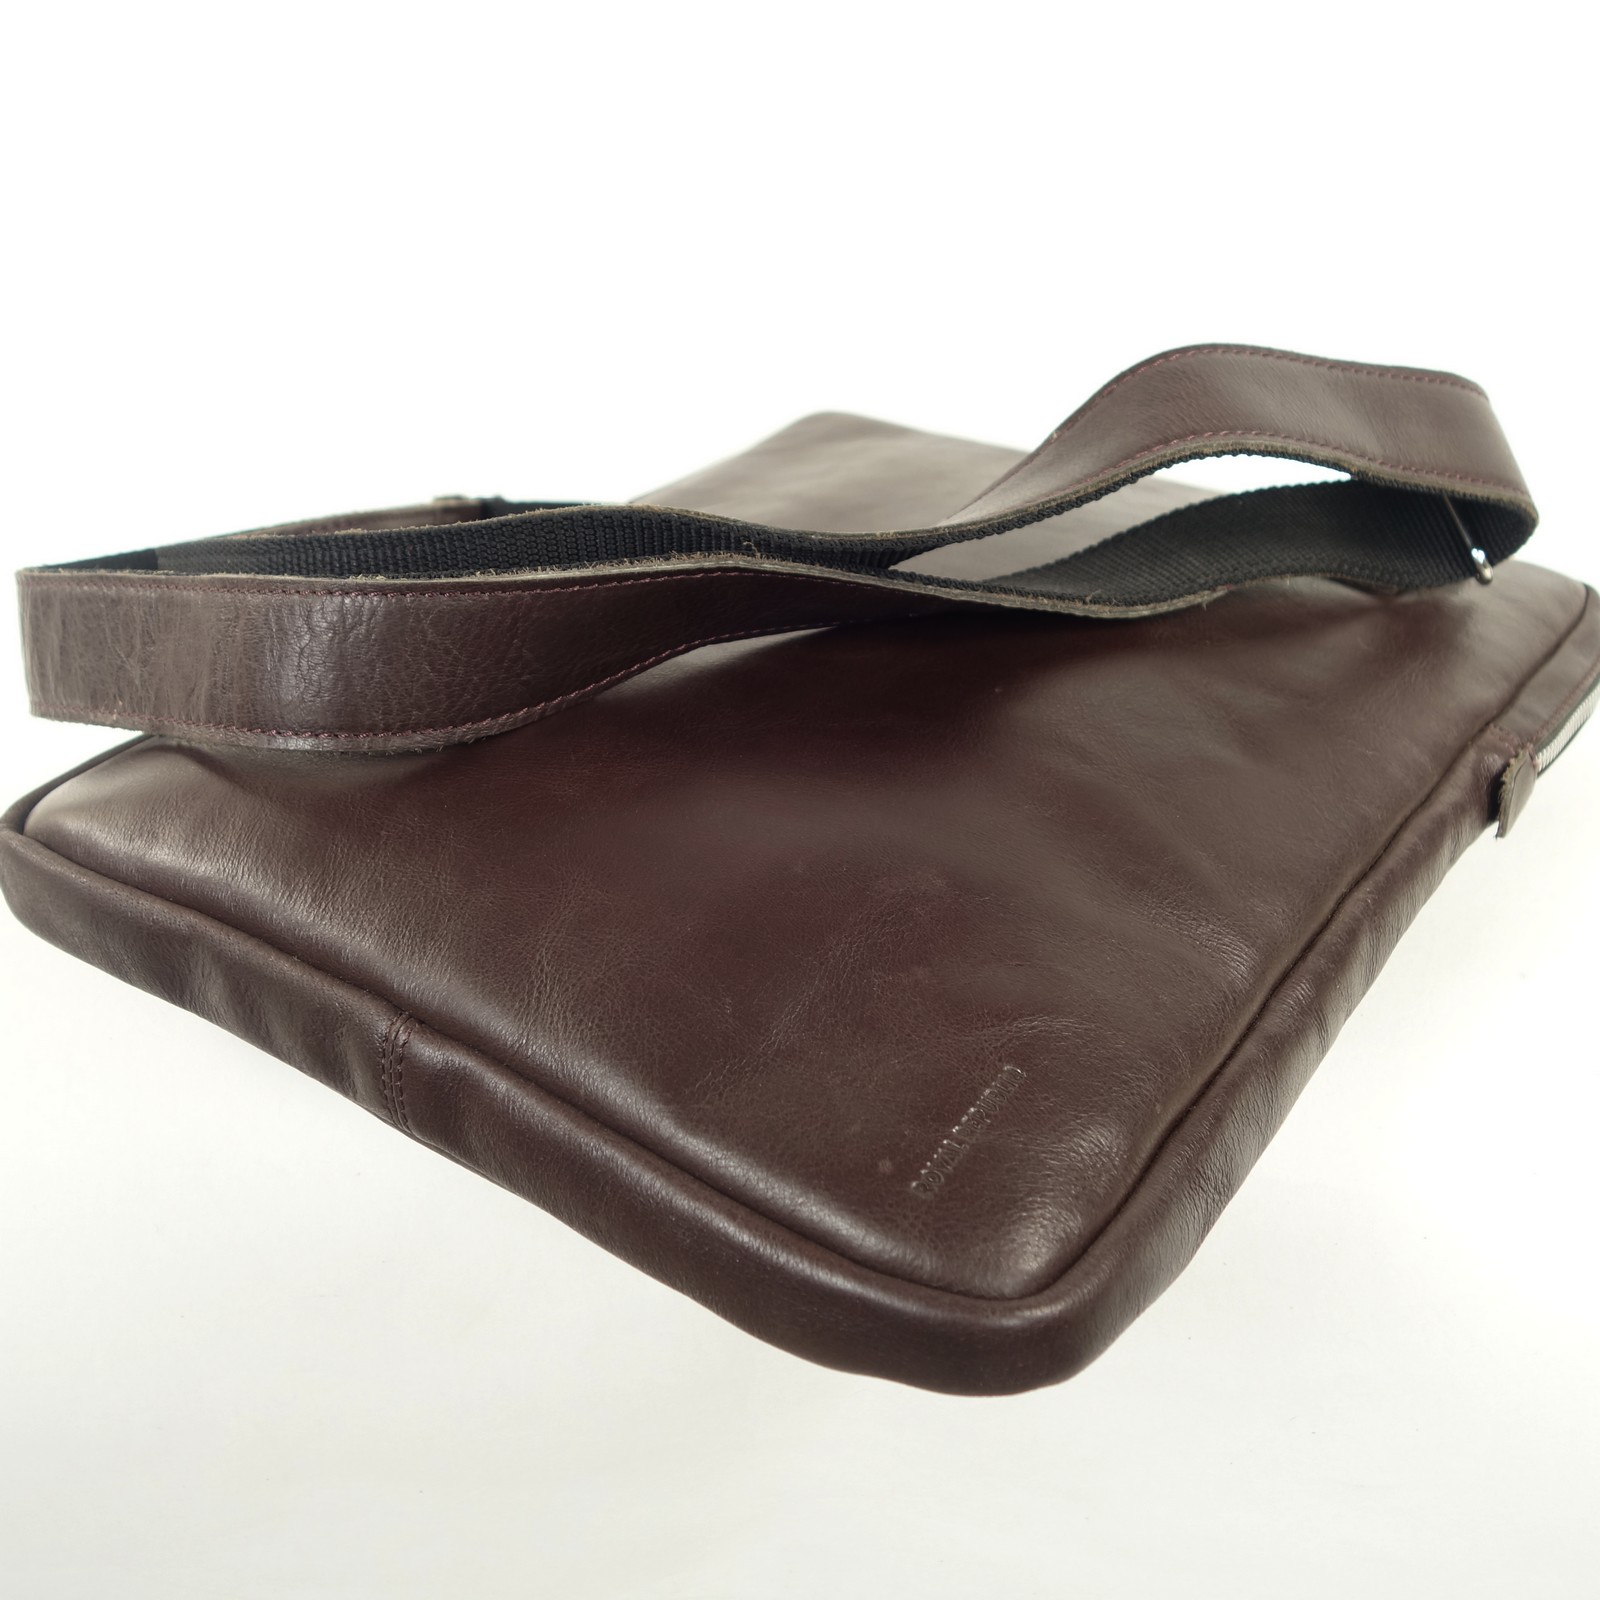 Sacoche cuir pc portable 16' & bandoulière / Royal republiq - Espritcuir